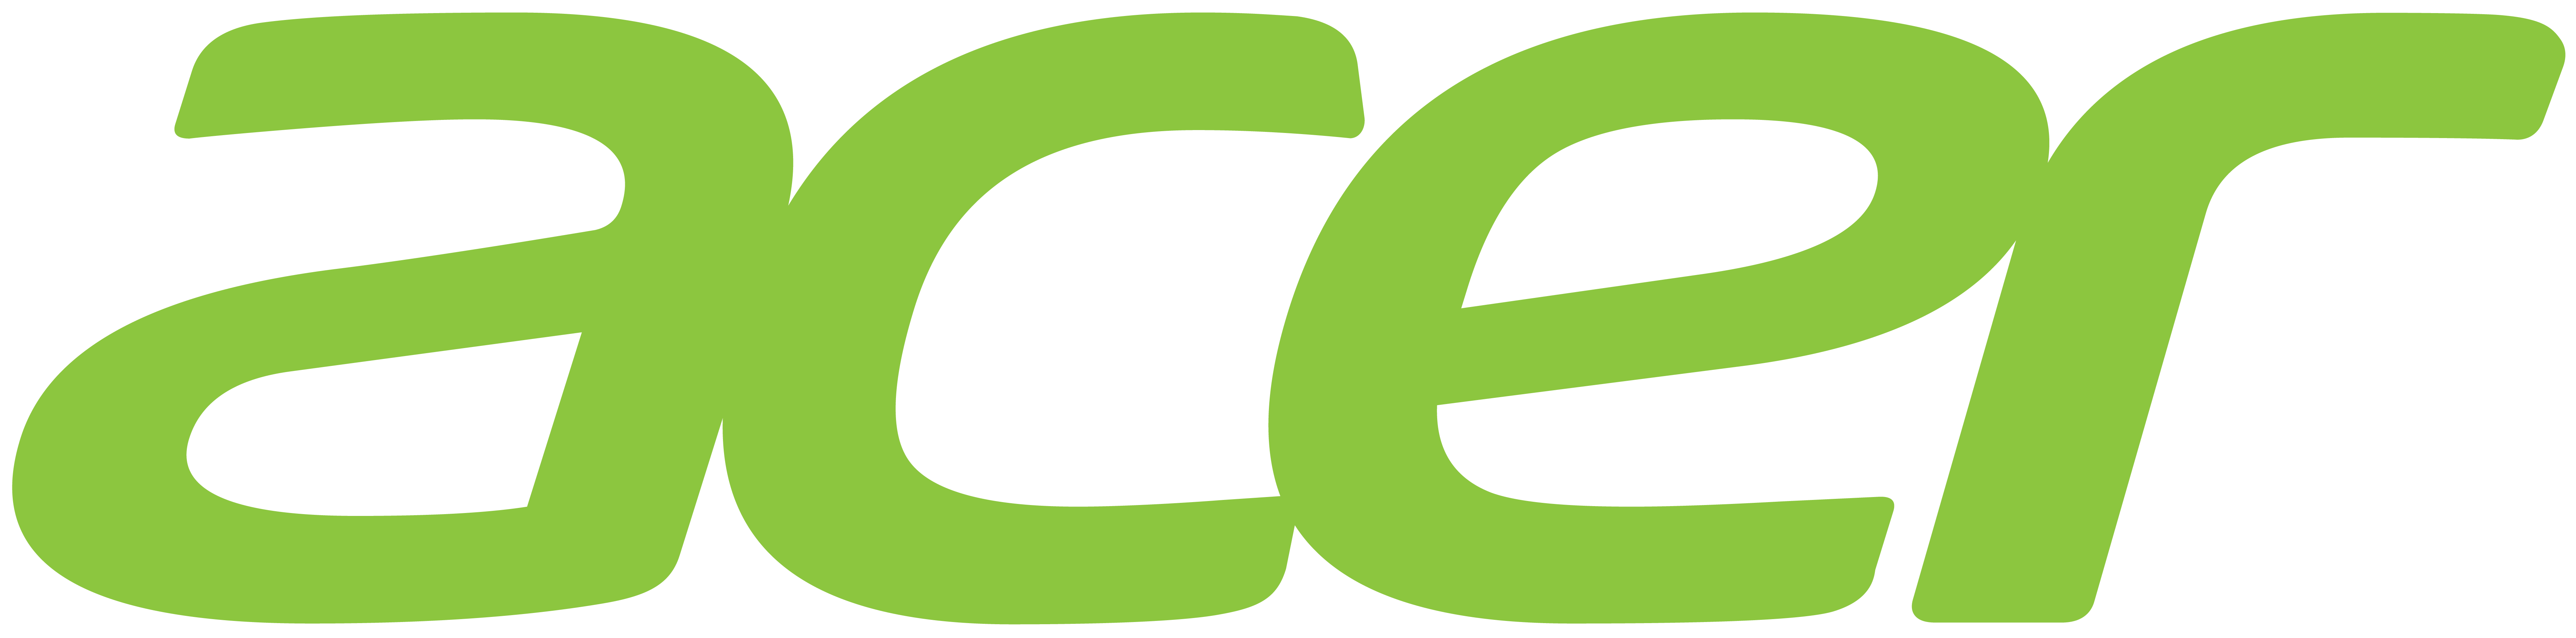 Acer Benelux logo